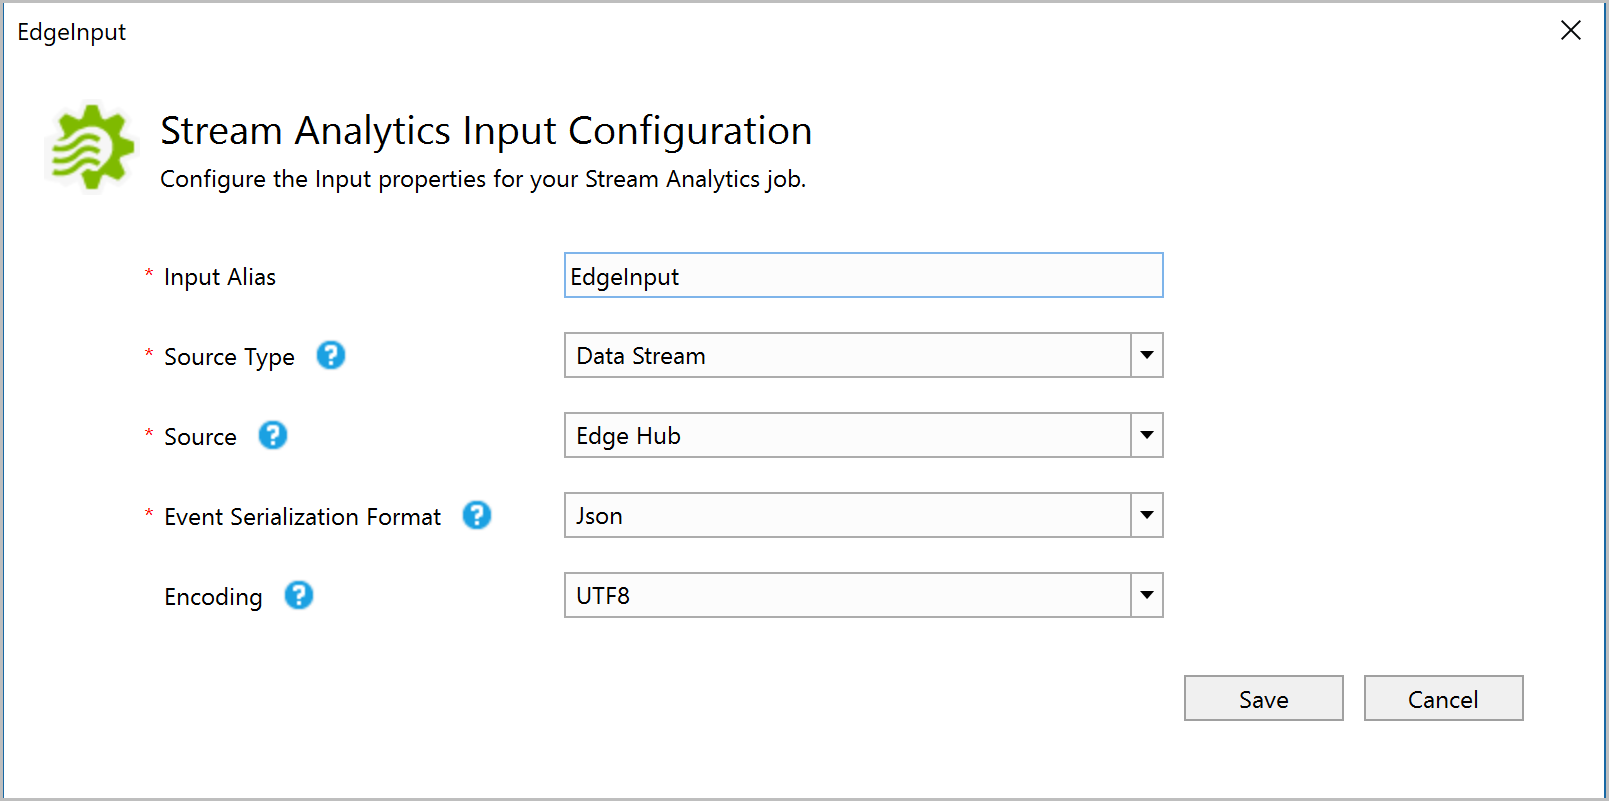 Stream Analytics job input configuration